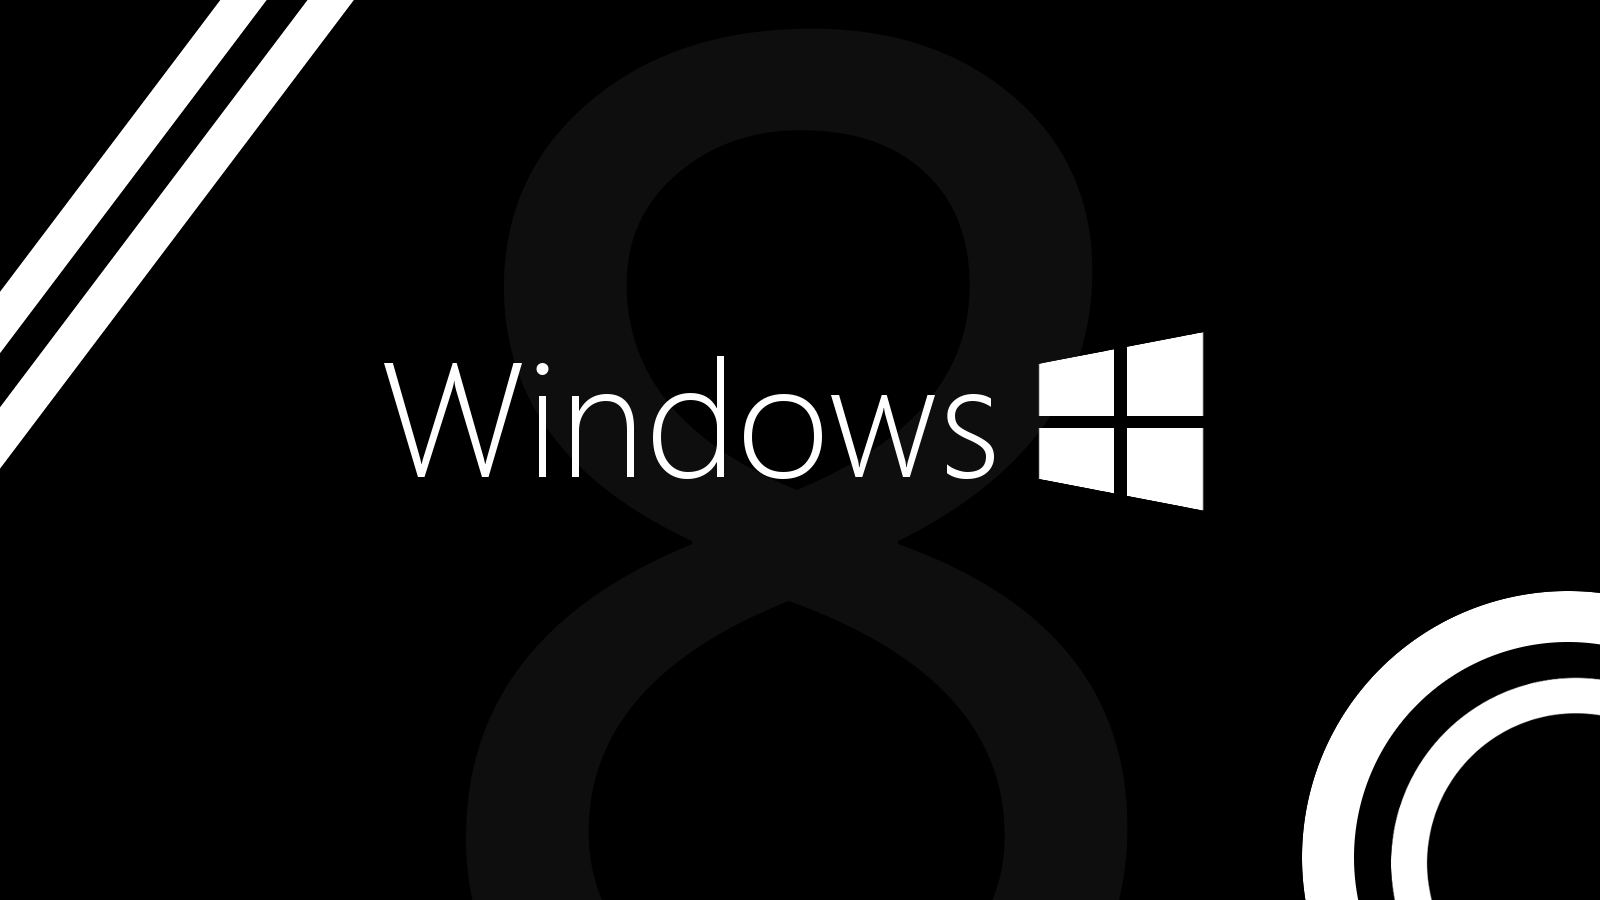 Windows 8 Black Wallpapers - Wallpaper Cave